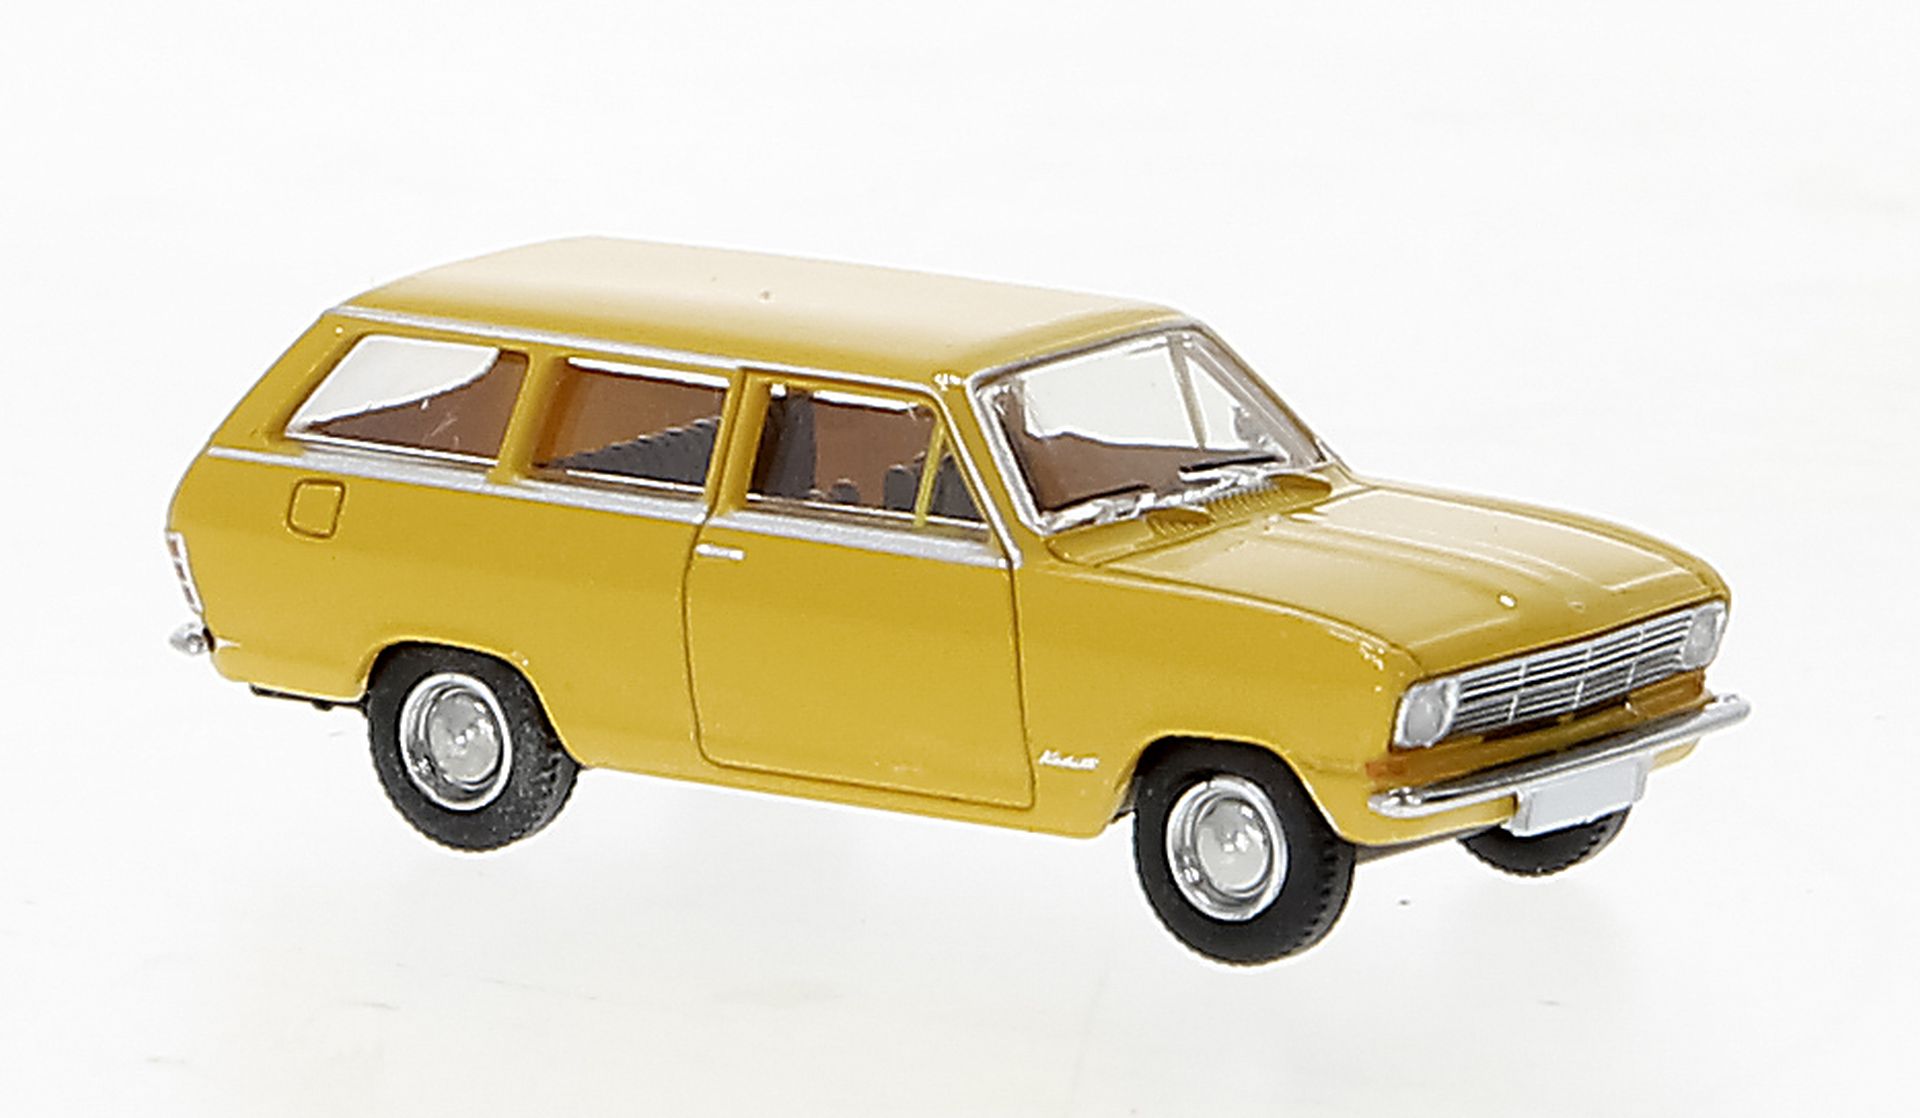 Brekina 20433 - Opel Kadett B Caravan, orange, 1965